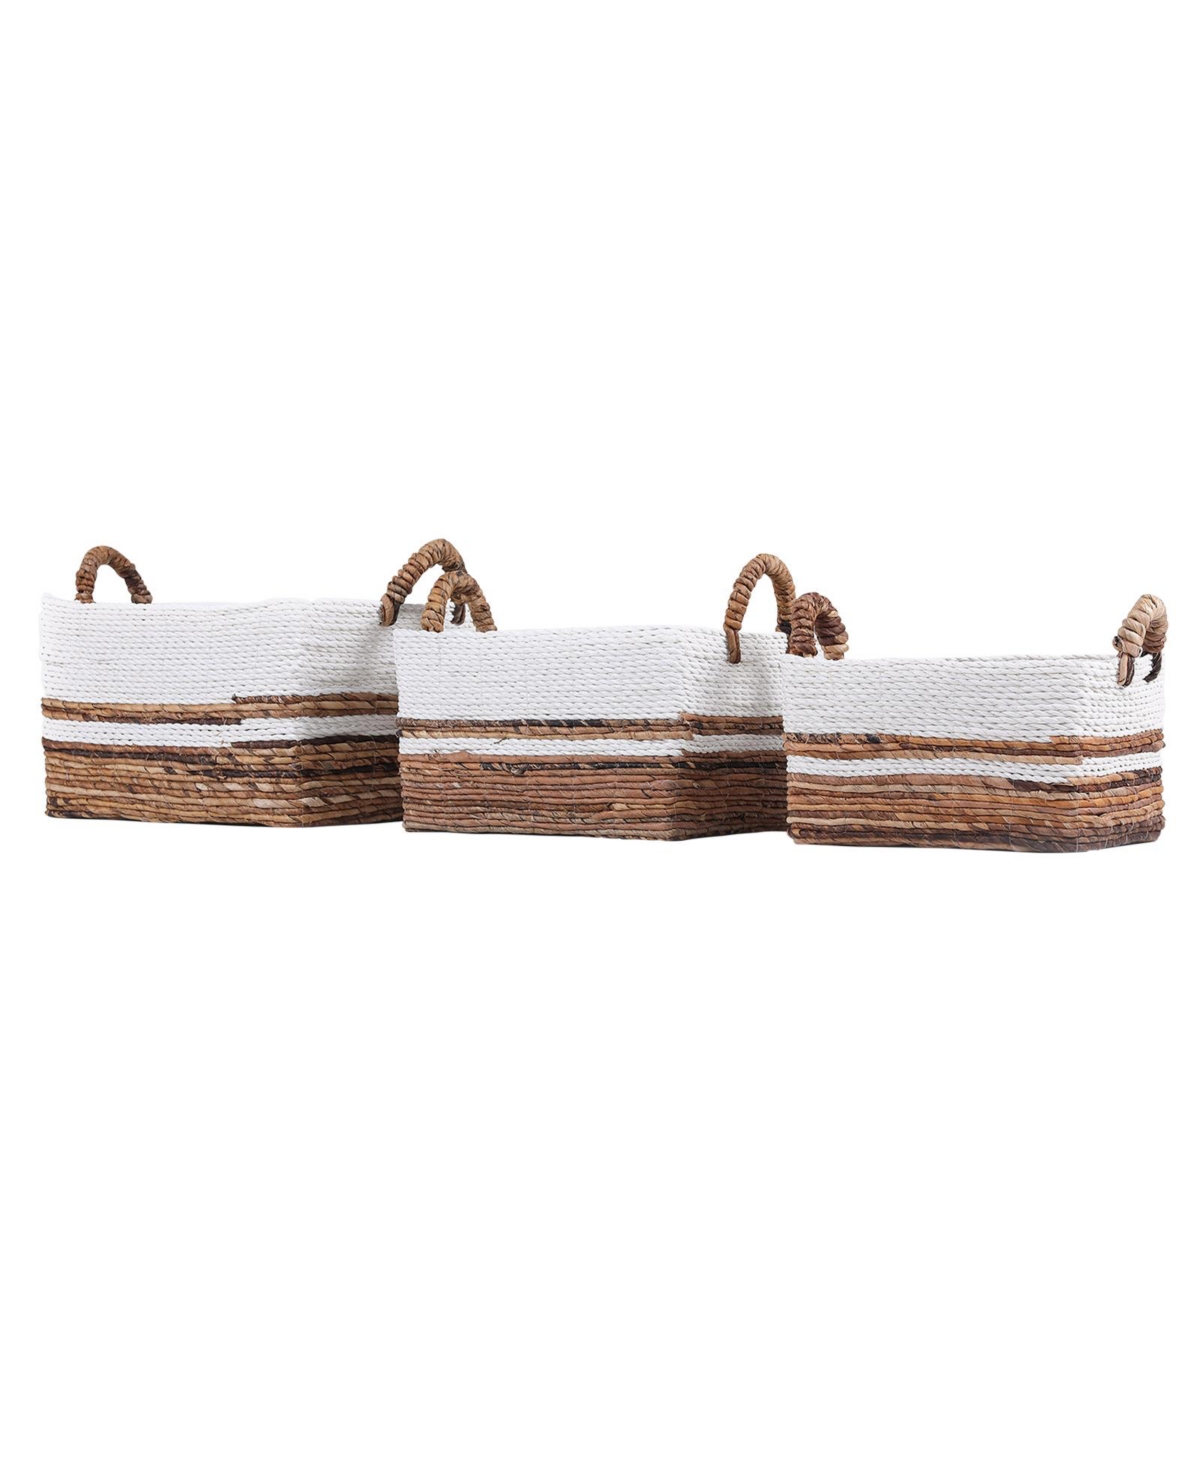 Baum 3 Piece Rectangular Dark Banana And Raffia Rope Storage Basket Set With Ear Handles In Natural And White